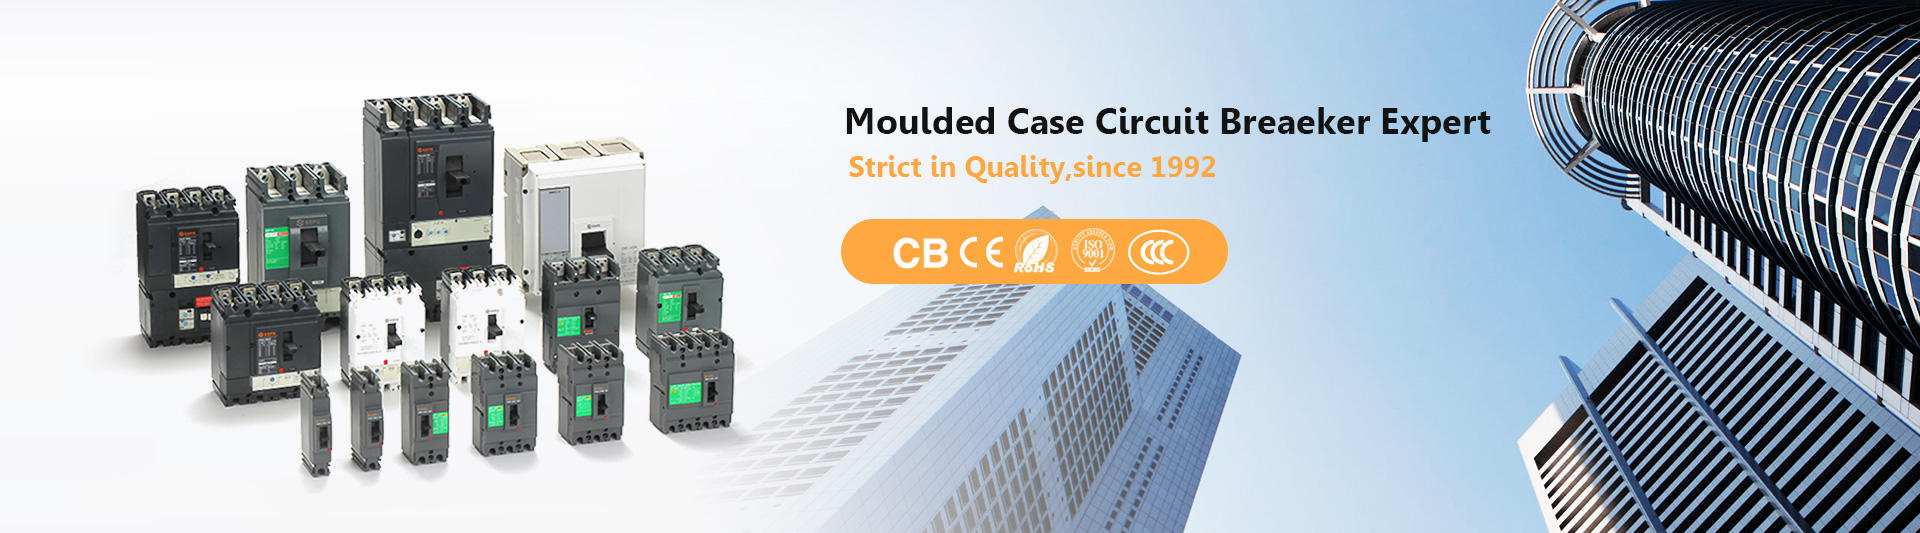 Moulded Case Circuit Breaeker Expert